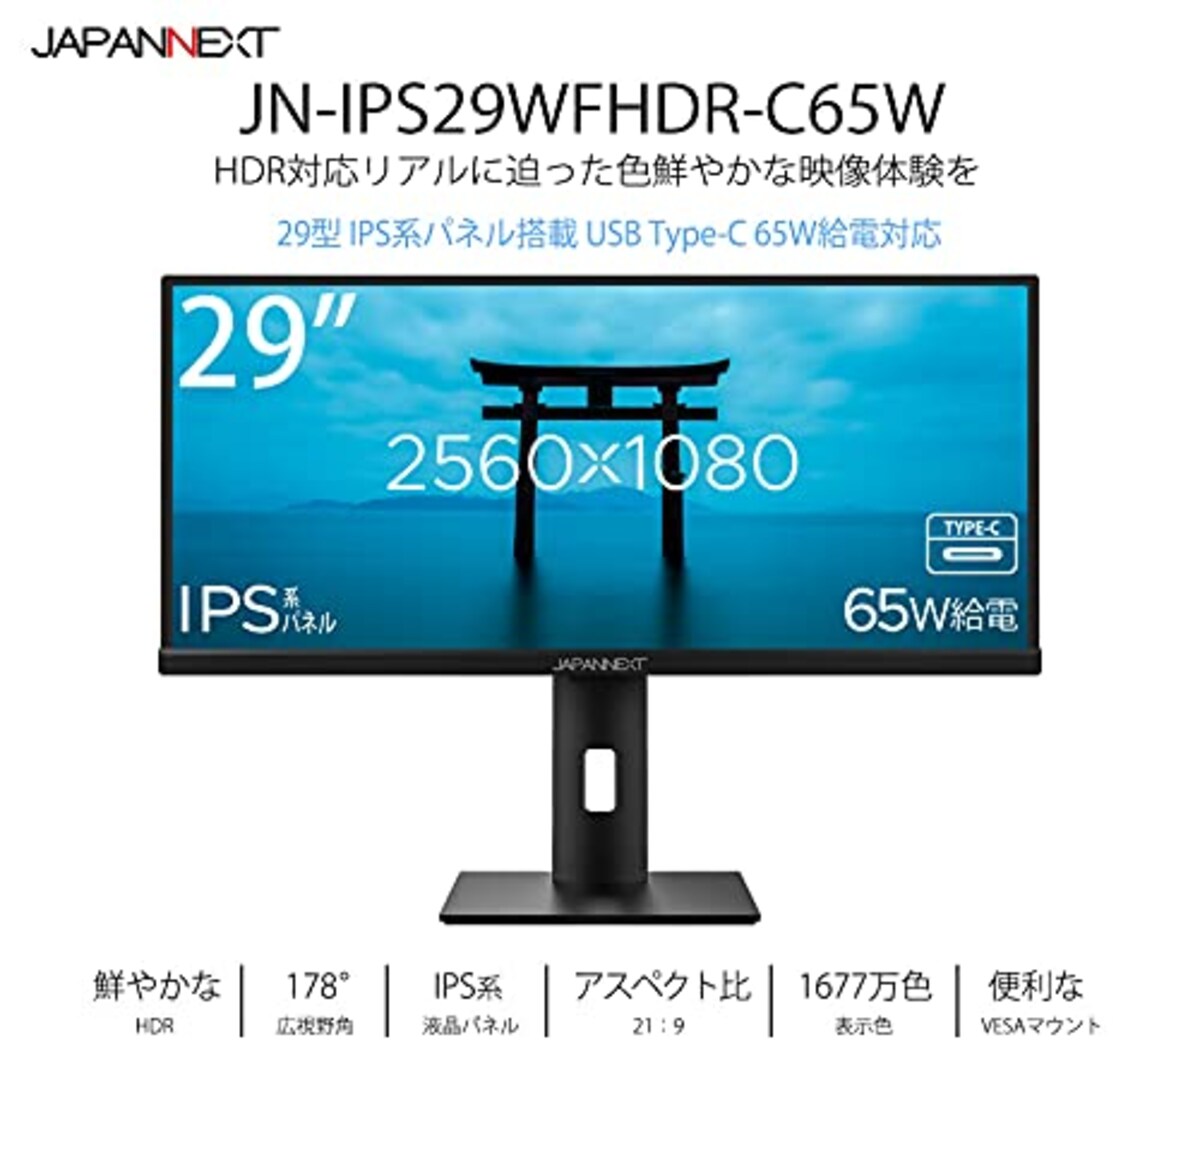  JAPANNEXT 29インチ ワイドFHD(2560 x 1080) 液晶モニター JN-IPS29WFHDR-C65W HDMI DP USB Type-C KVM画像2 